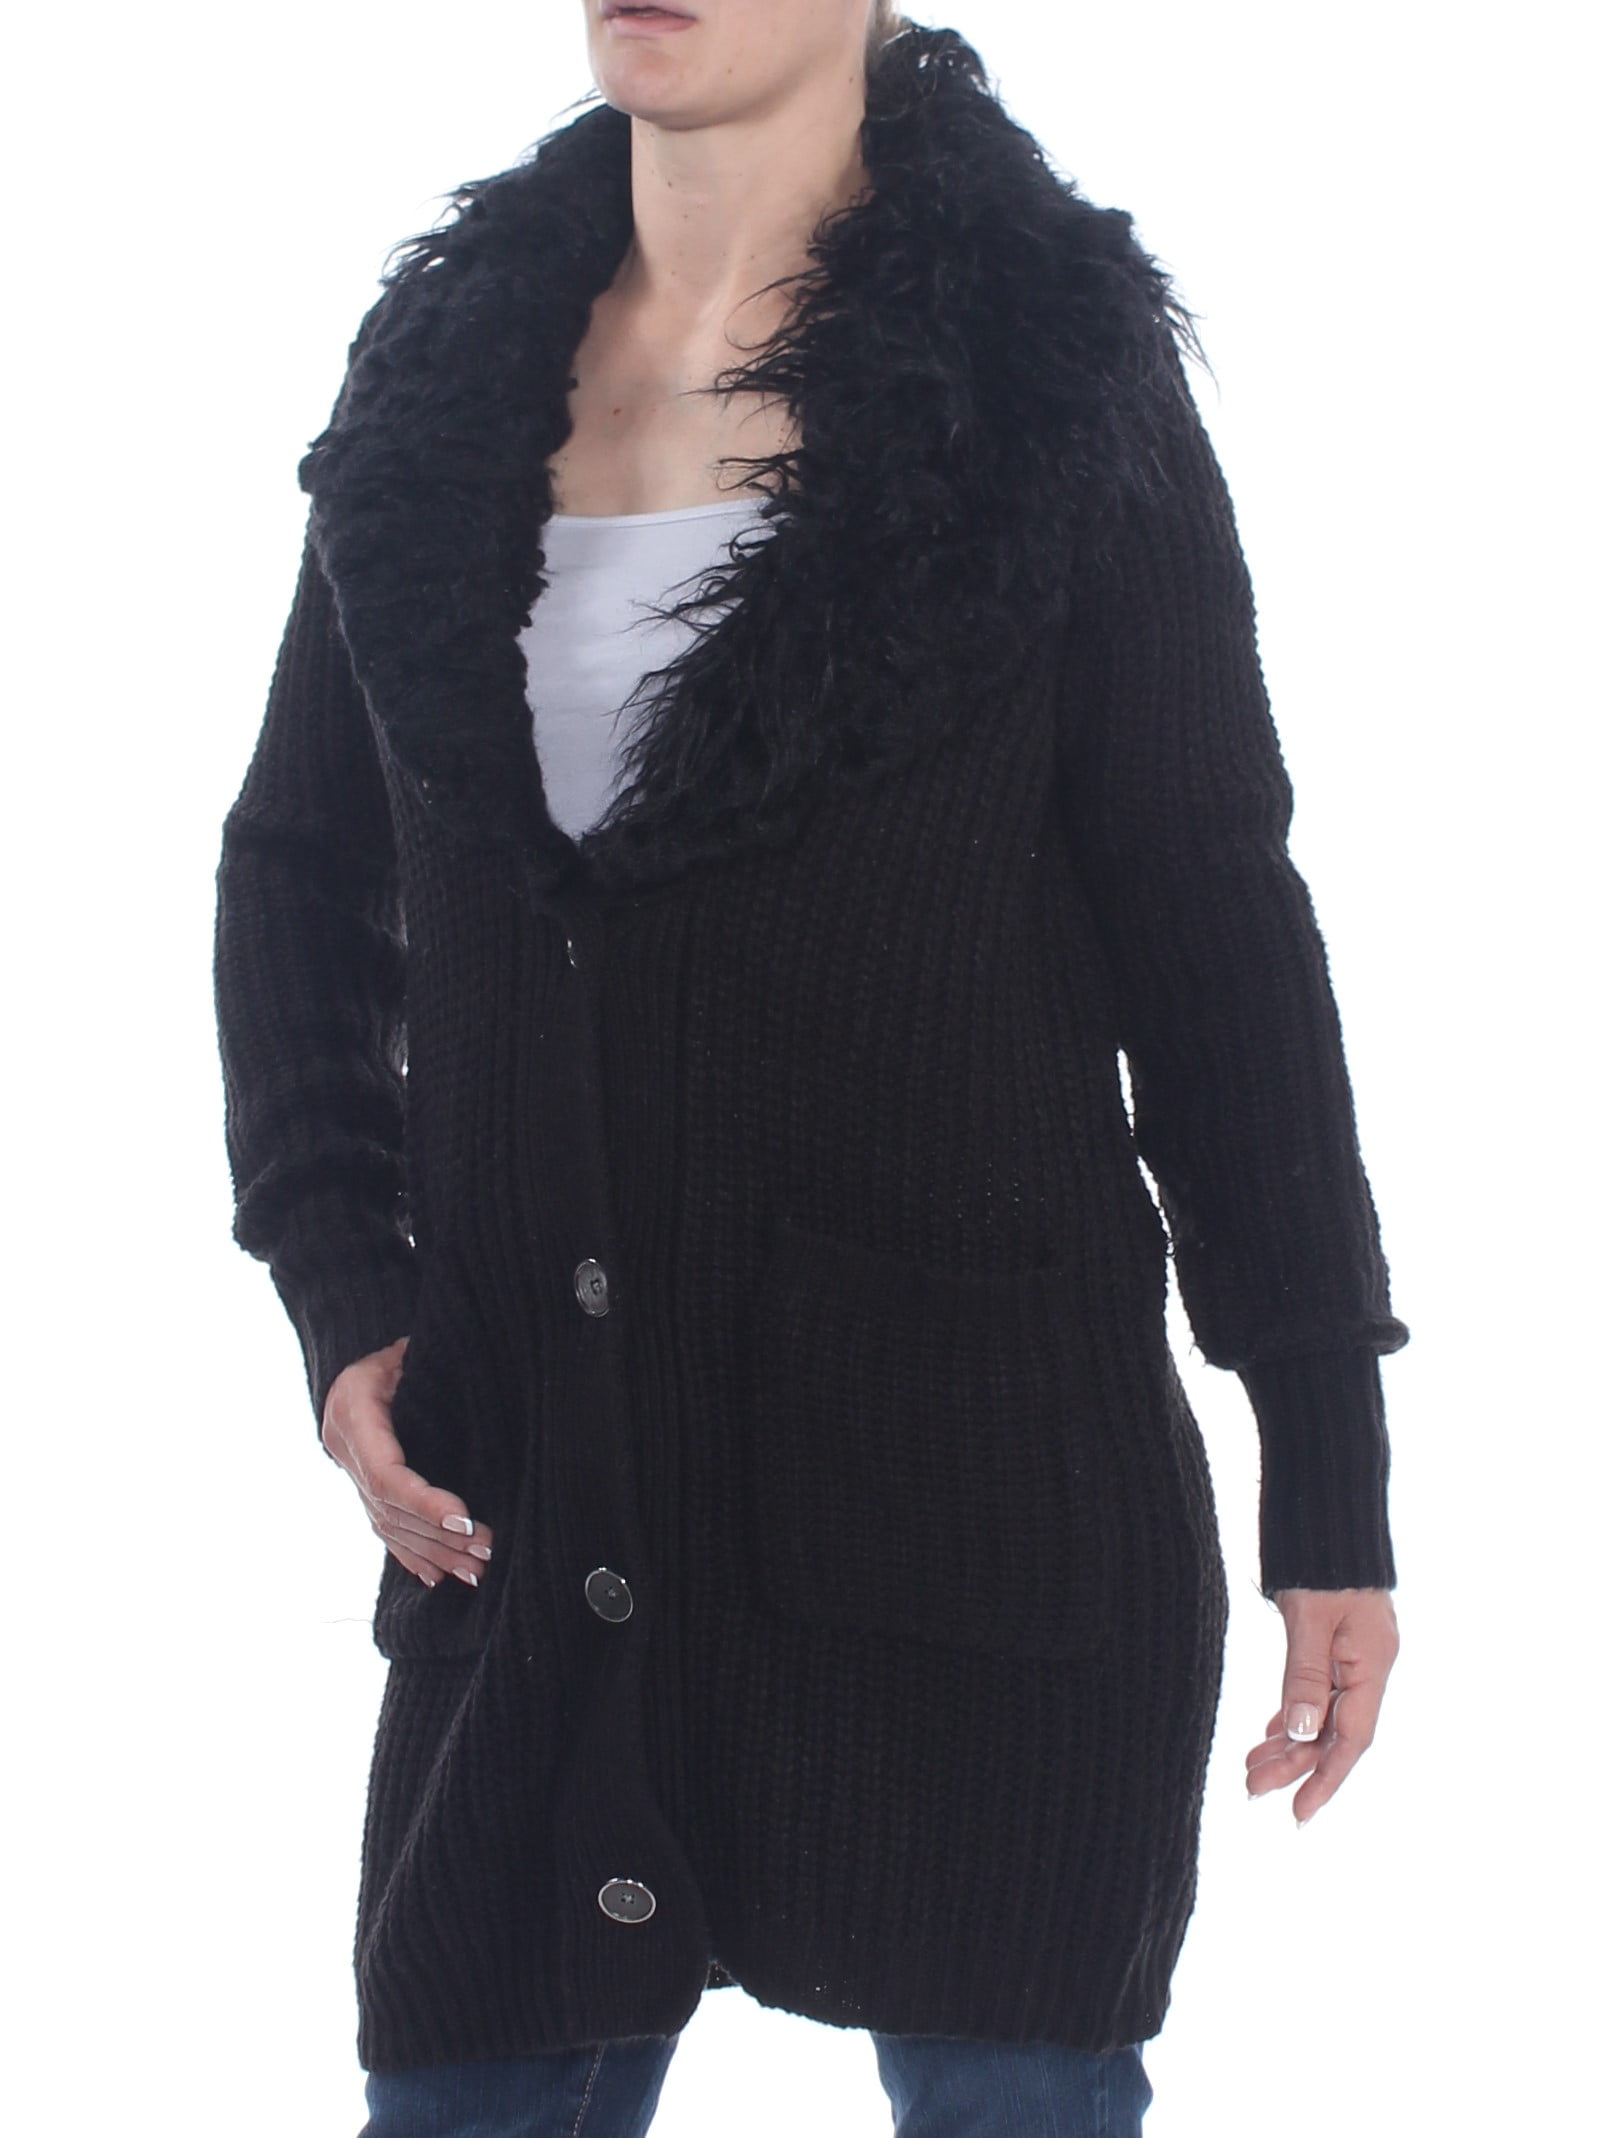 Jessica Simpson - JESSICA SIMPSON Womens Black Faux Fur Trim Cardigan